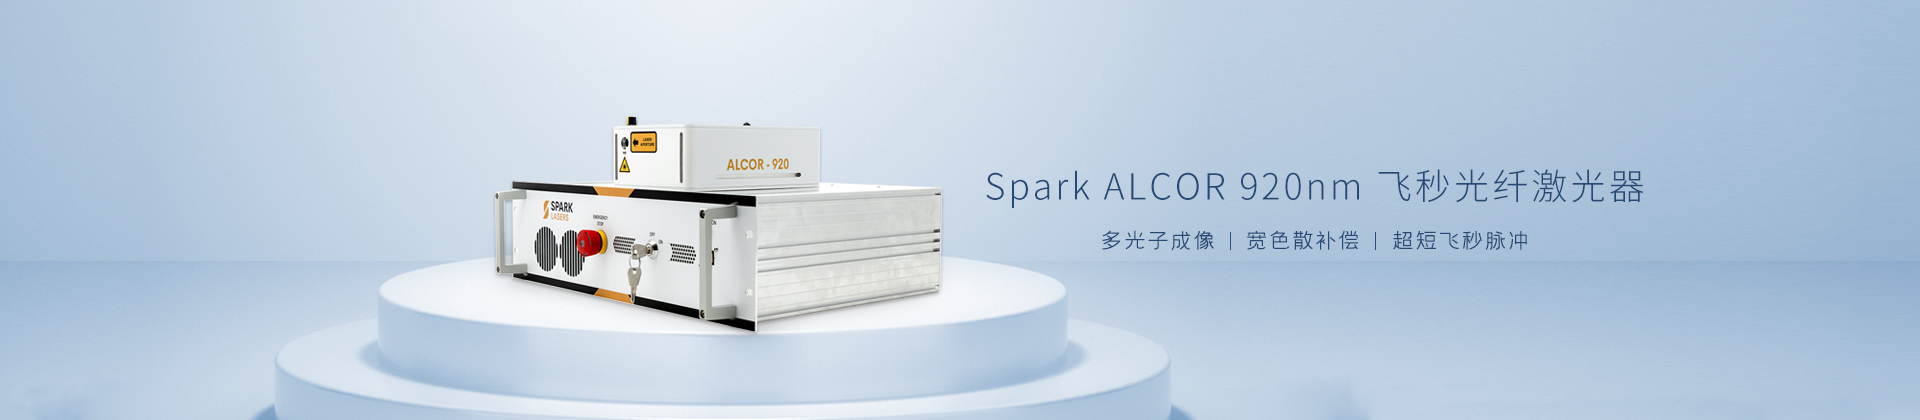 Spark ALCOR 920nm飞秒光纤激光器